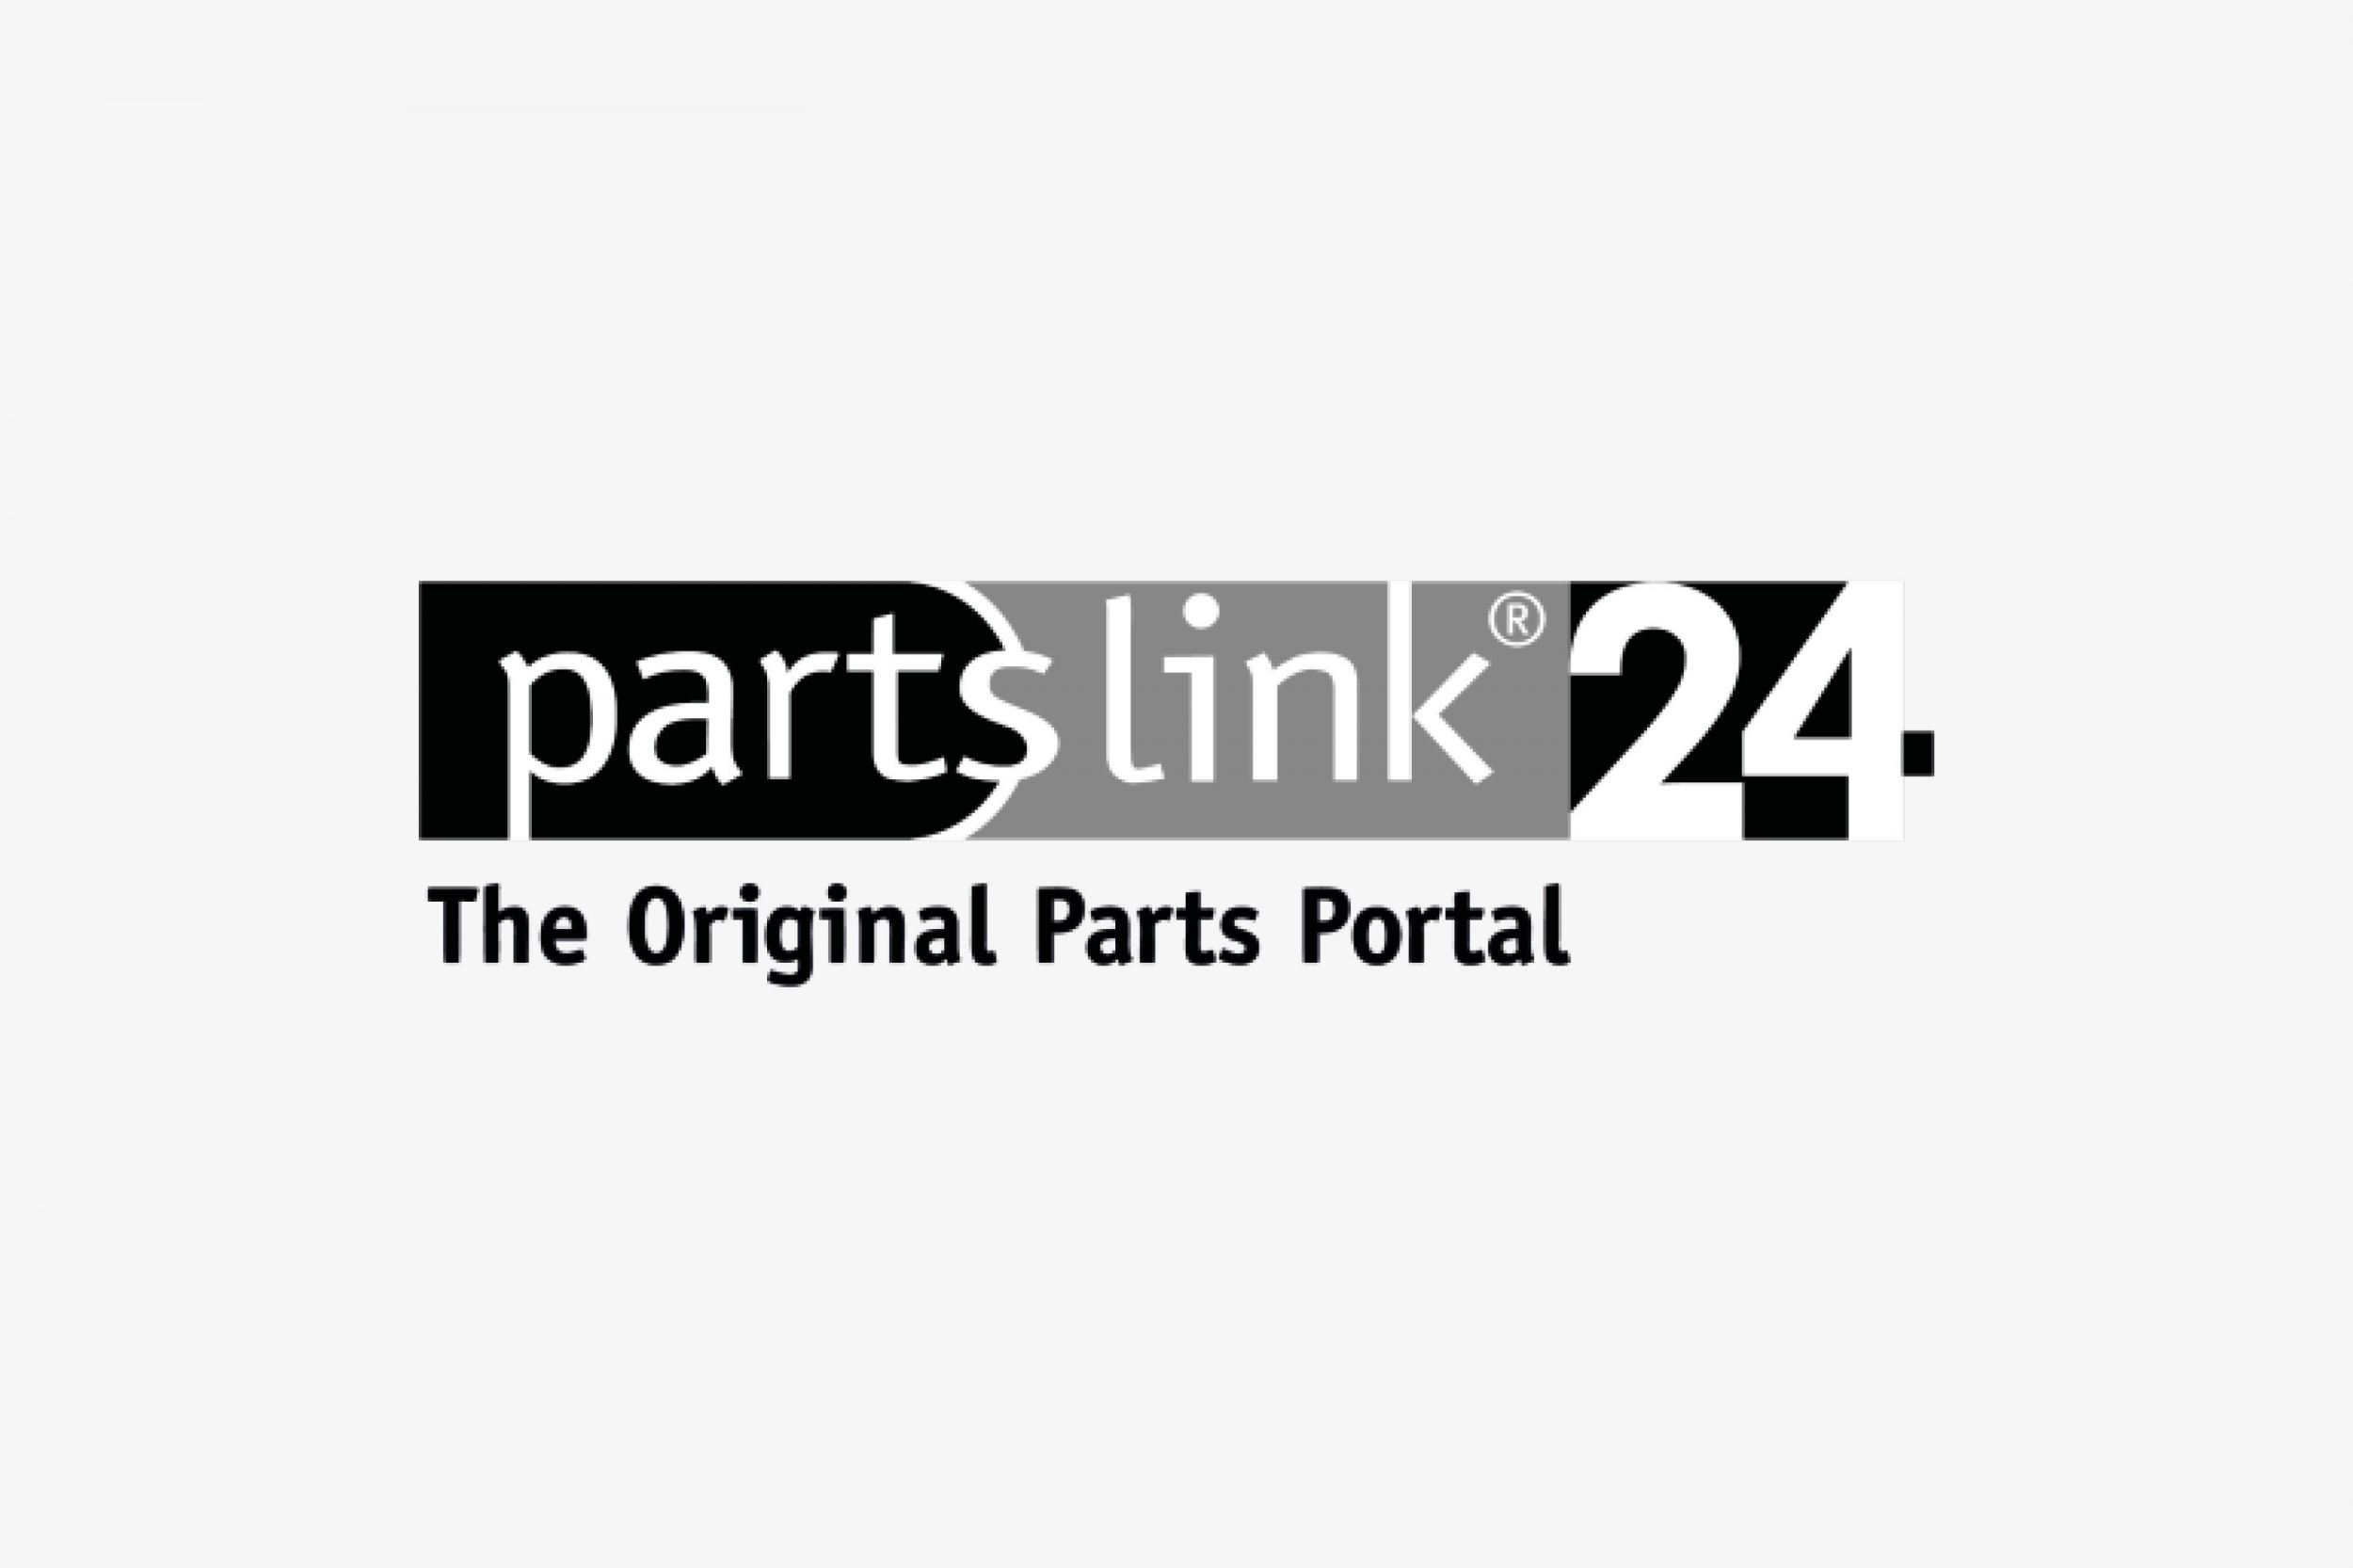 partslink 24